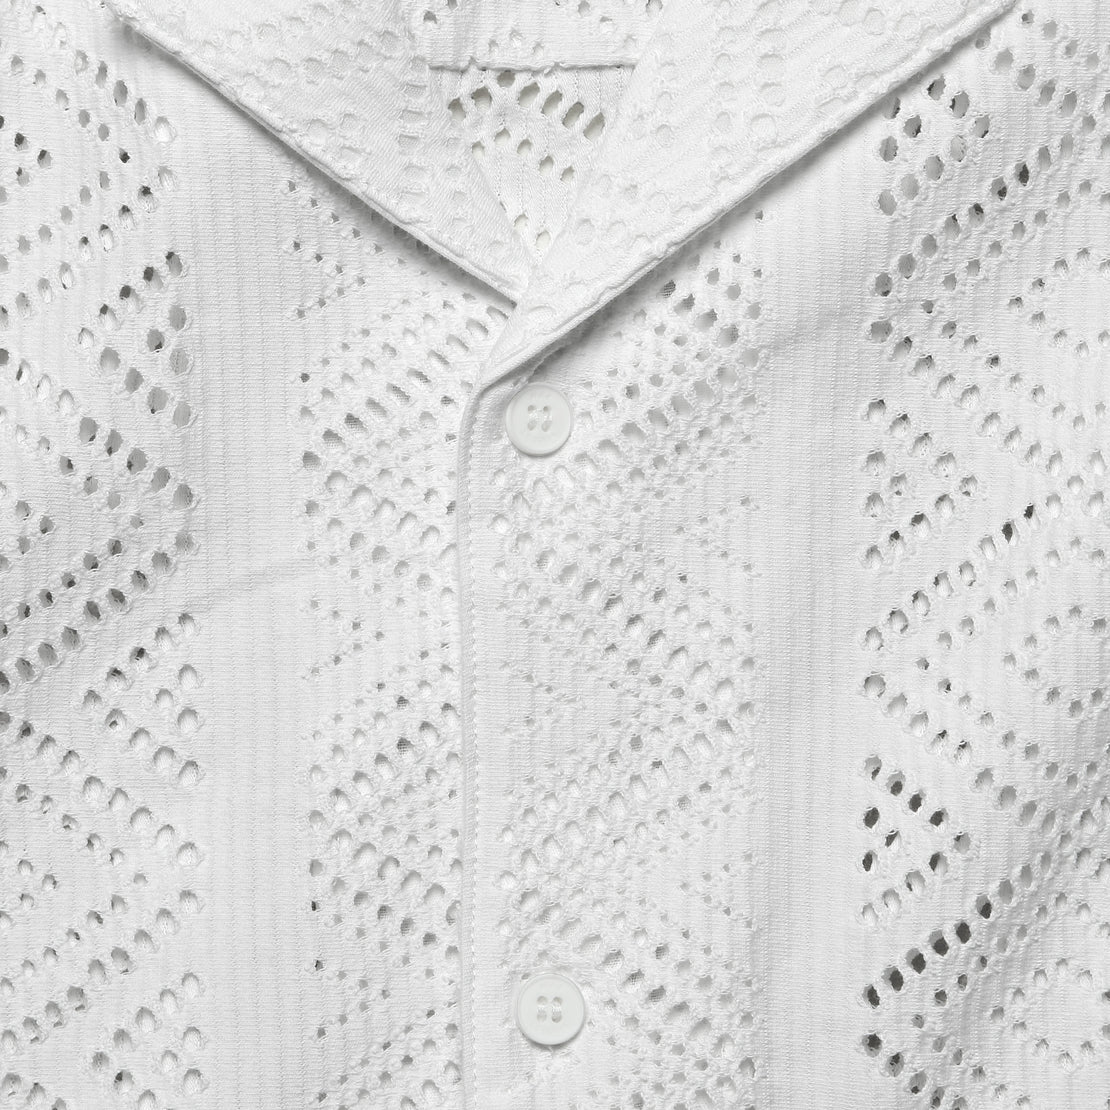 Didcot Shirt - Geo Lace White